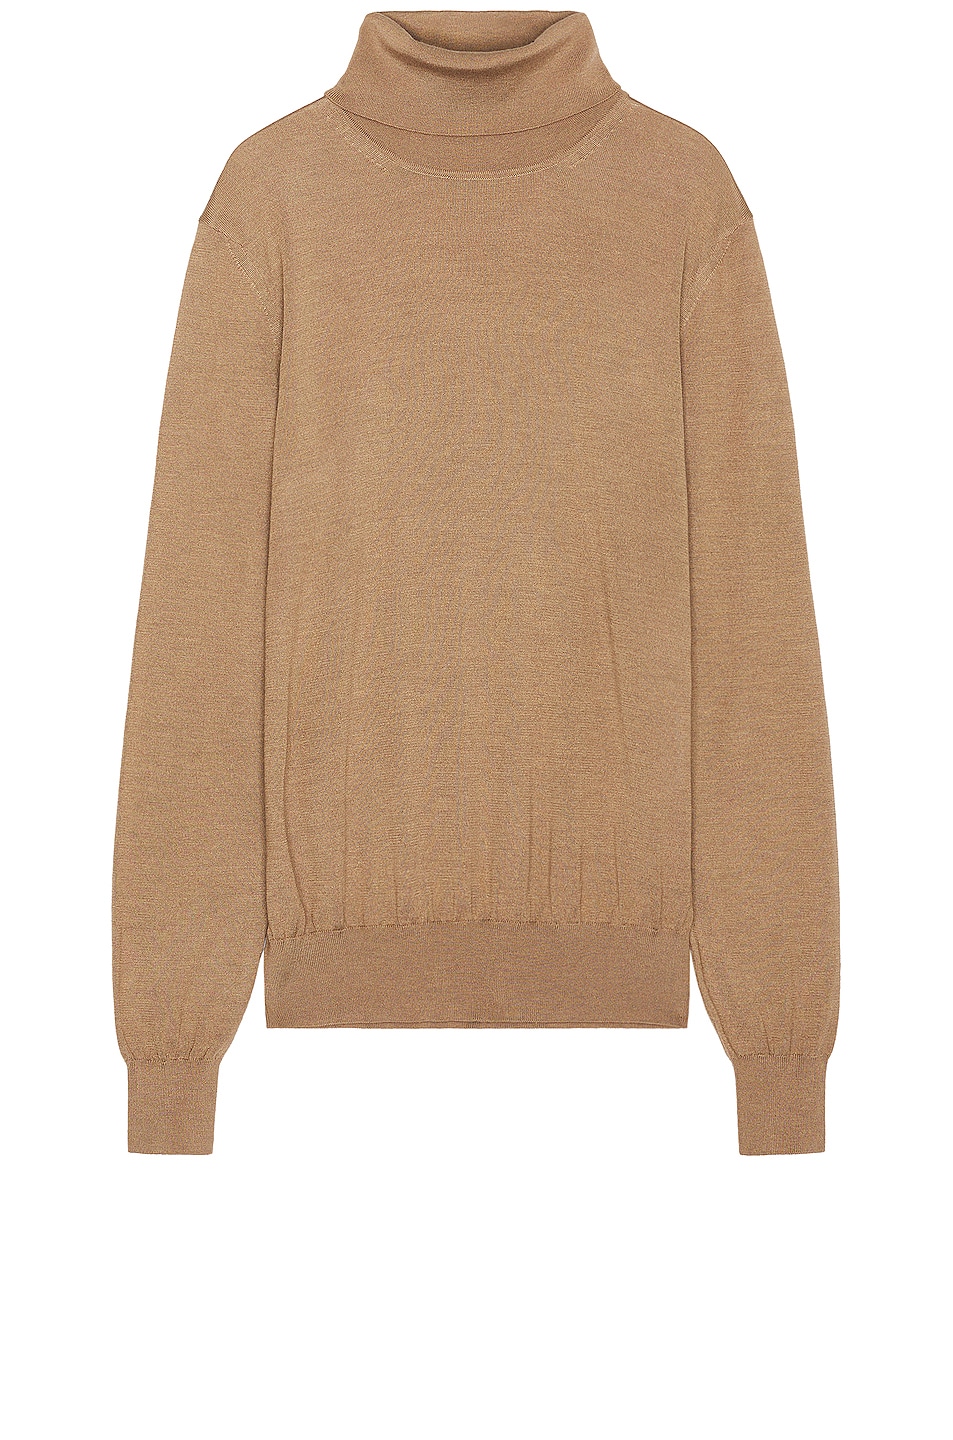 Image 1 of Saint Laurent Sweater in Camel Clair